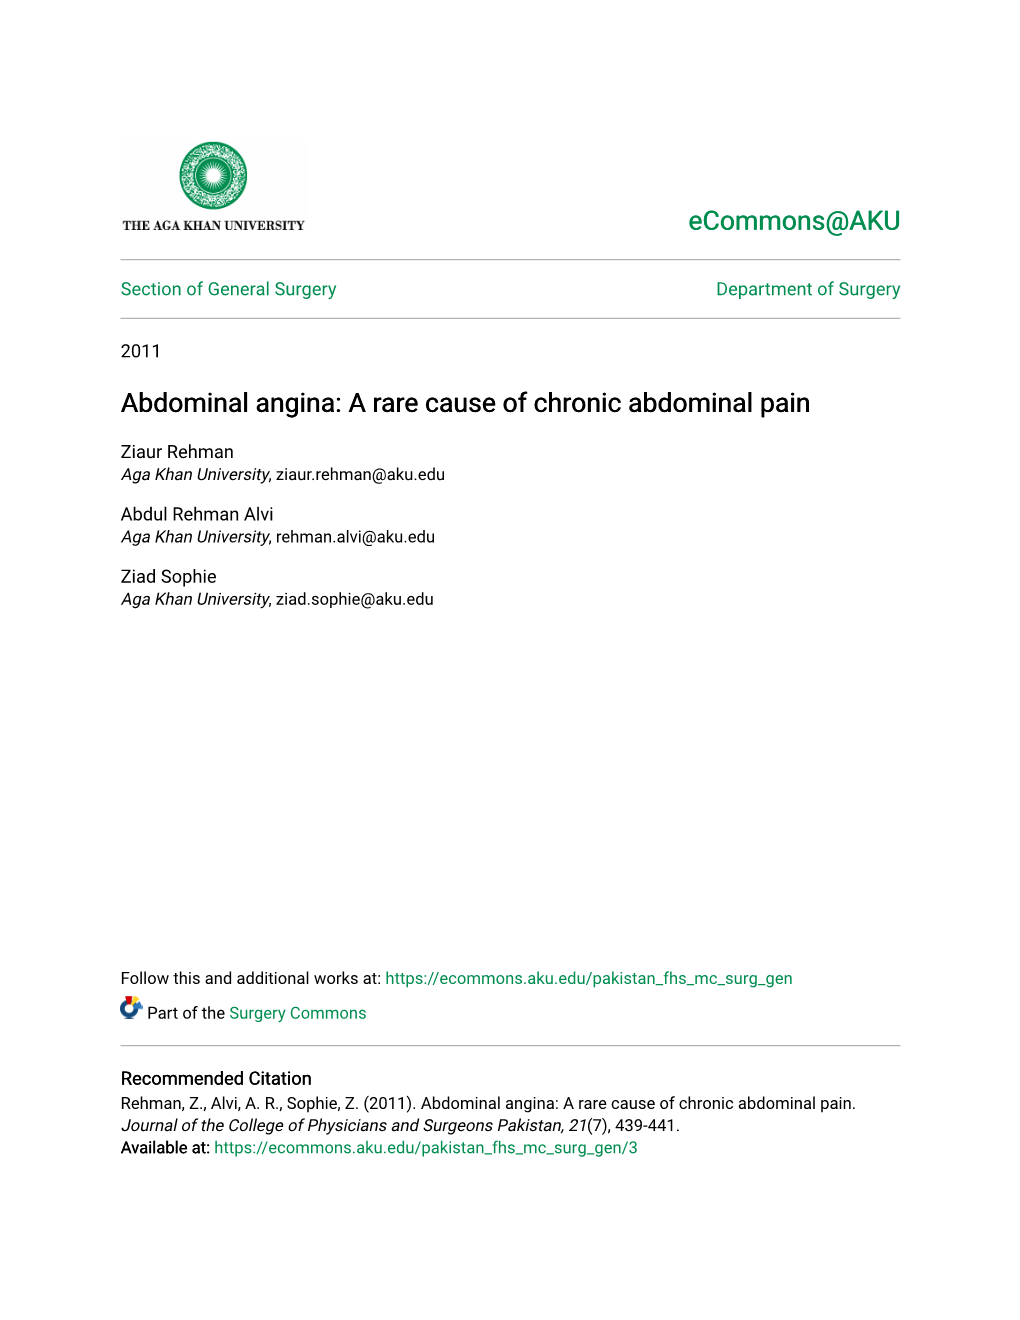 Abdominal Angina: a Rare Cause of Chronic Abdominal Pain